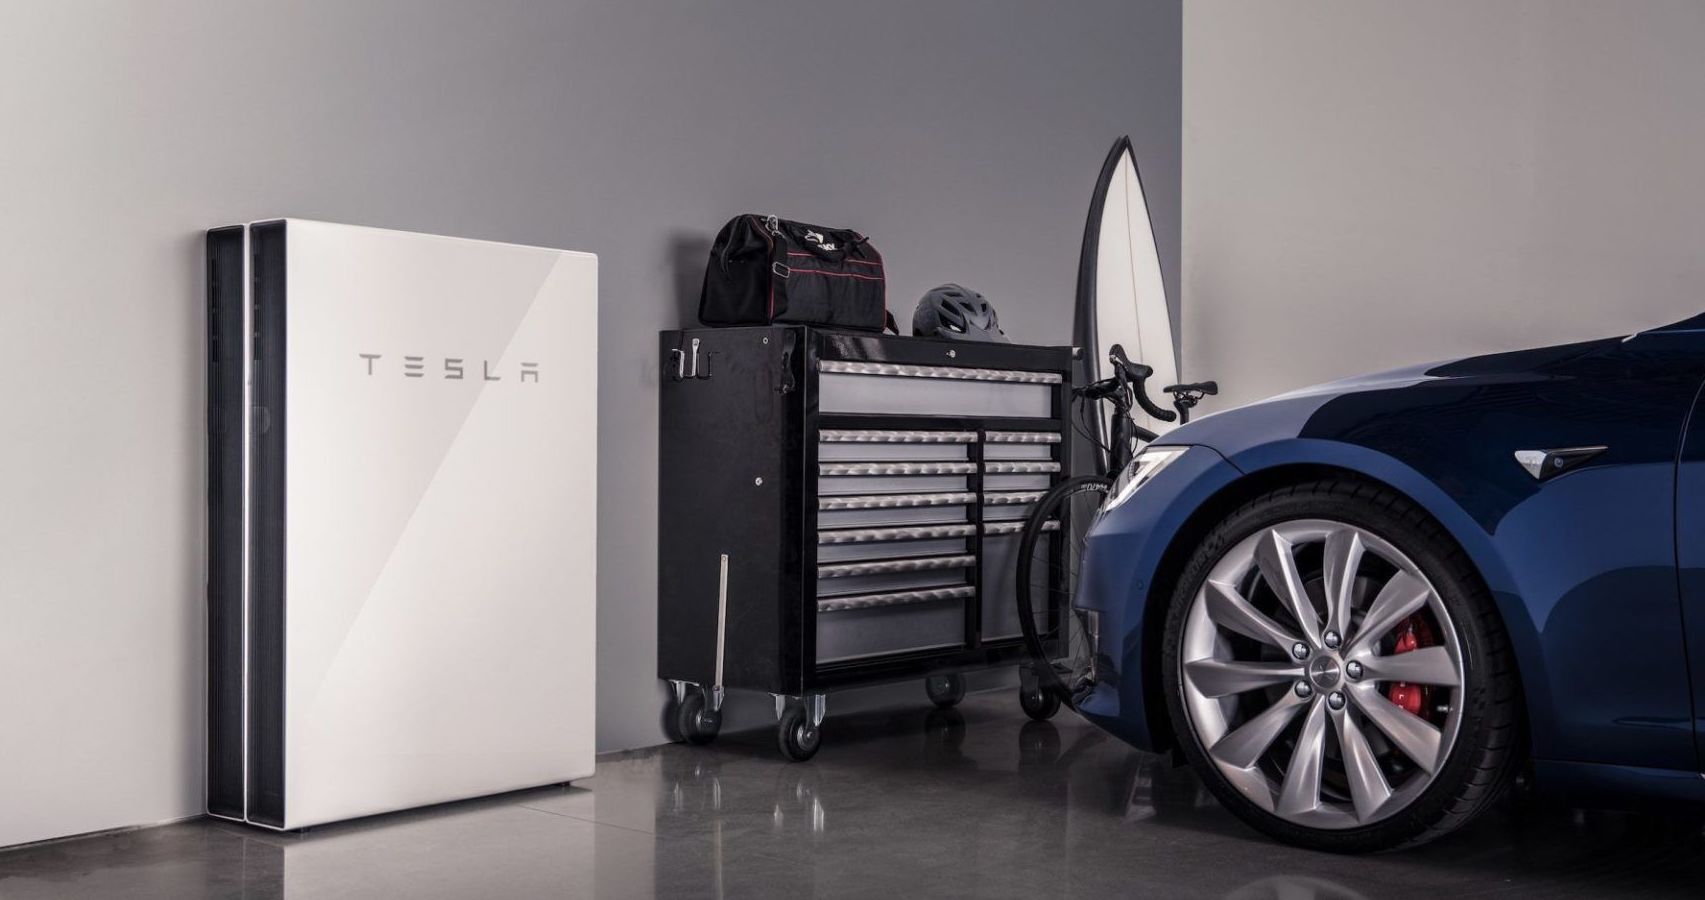 Tesla Powerwall 2 installed in a garage with tesla model 3 in blue